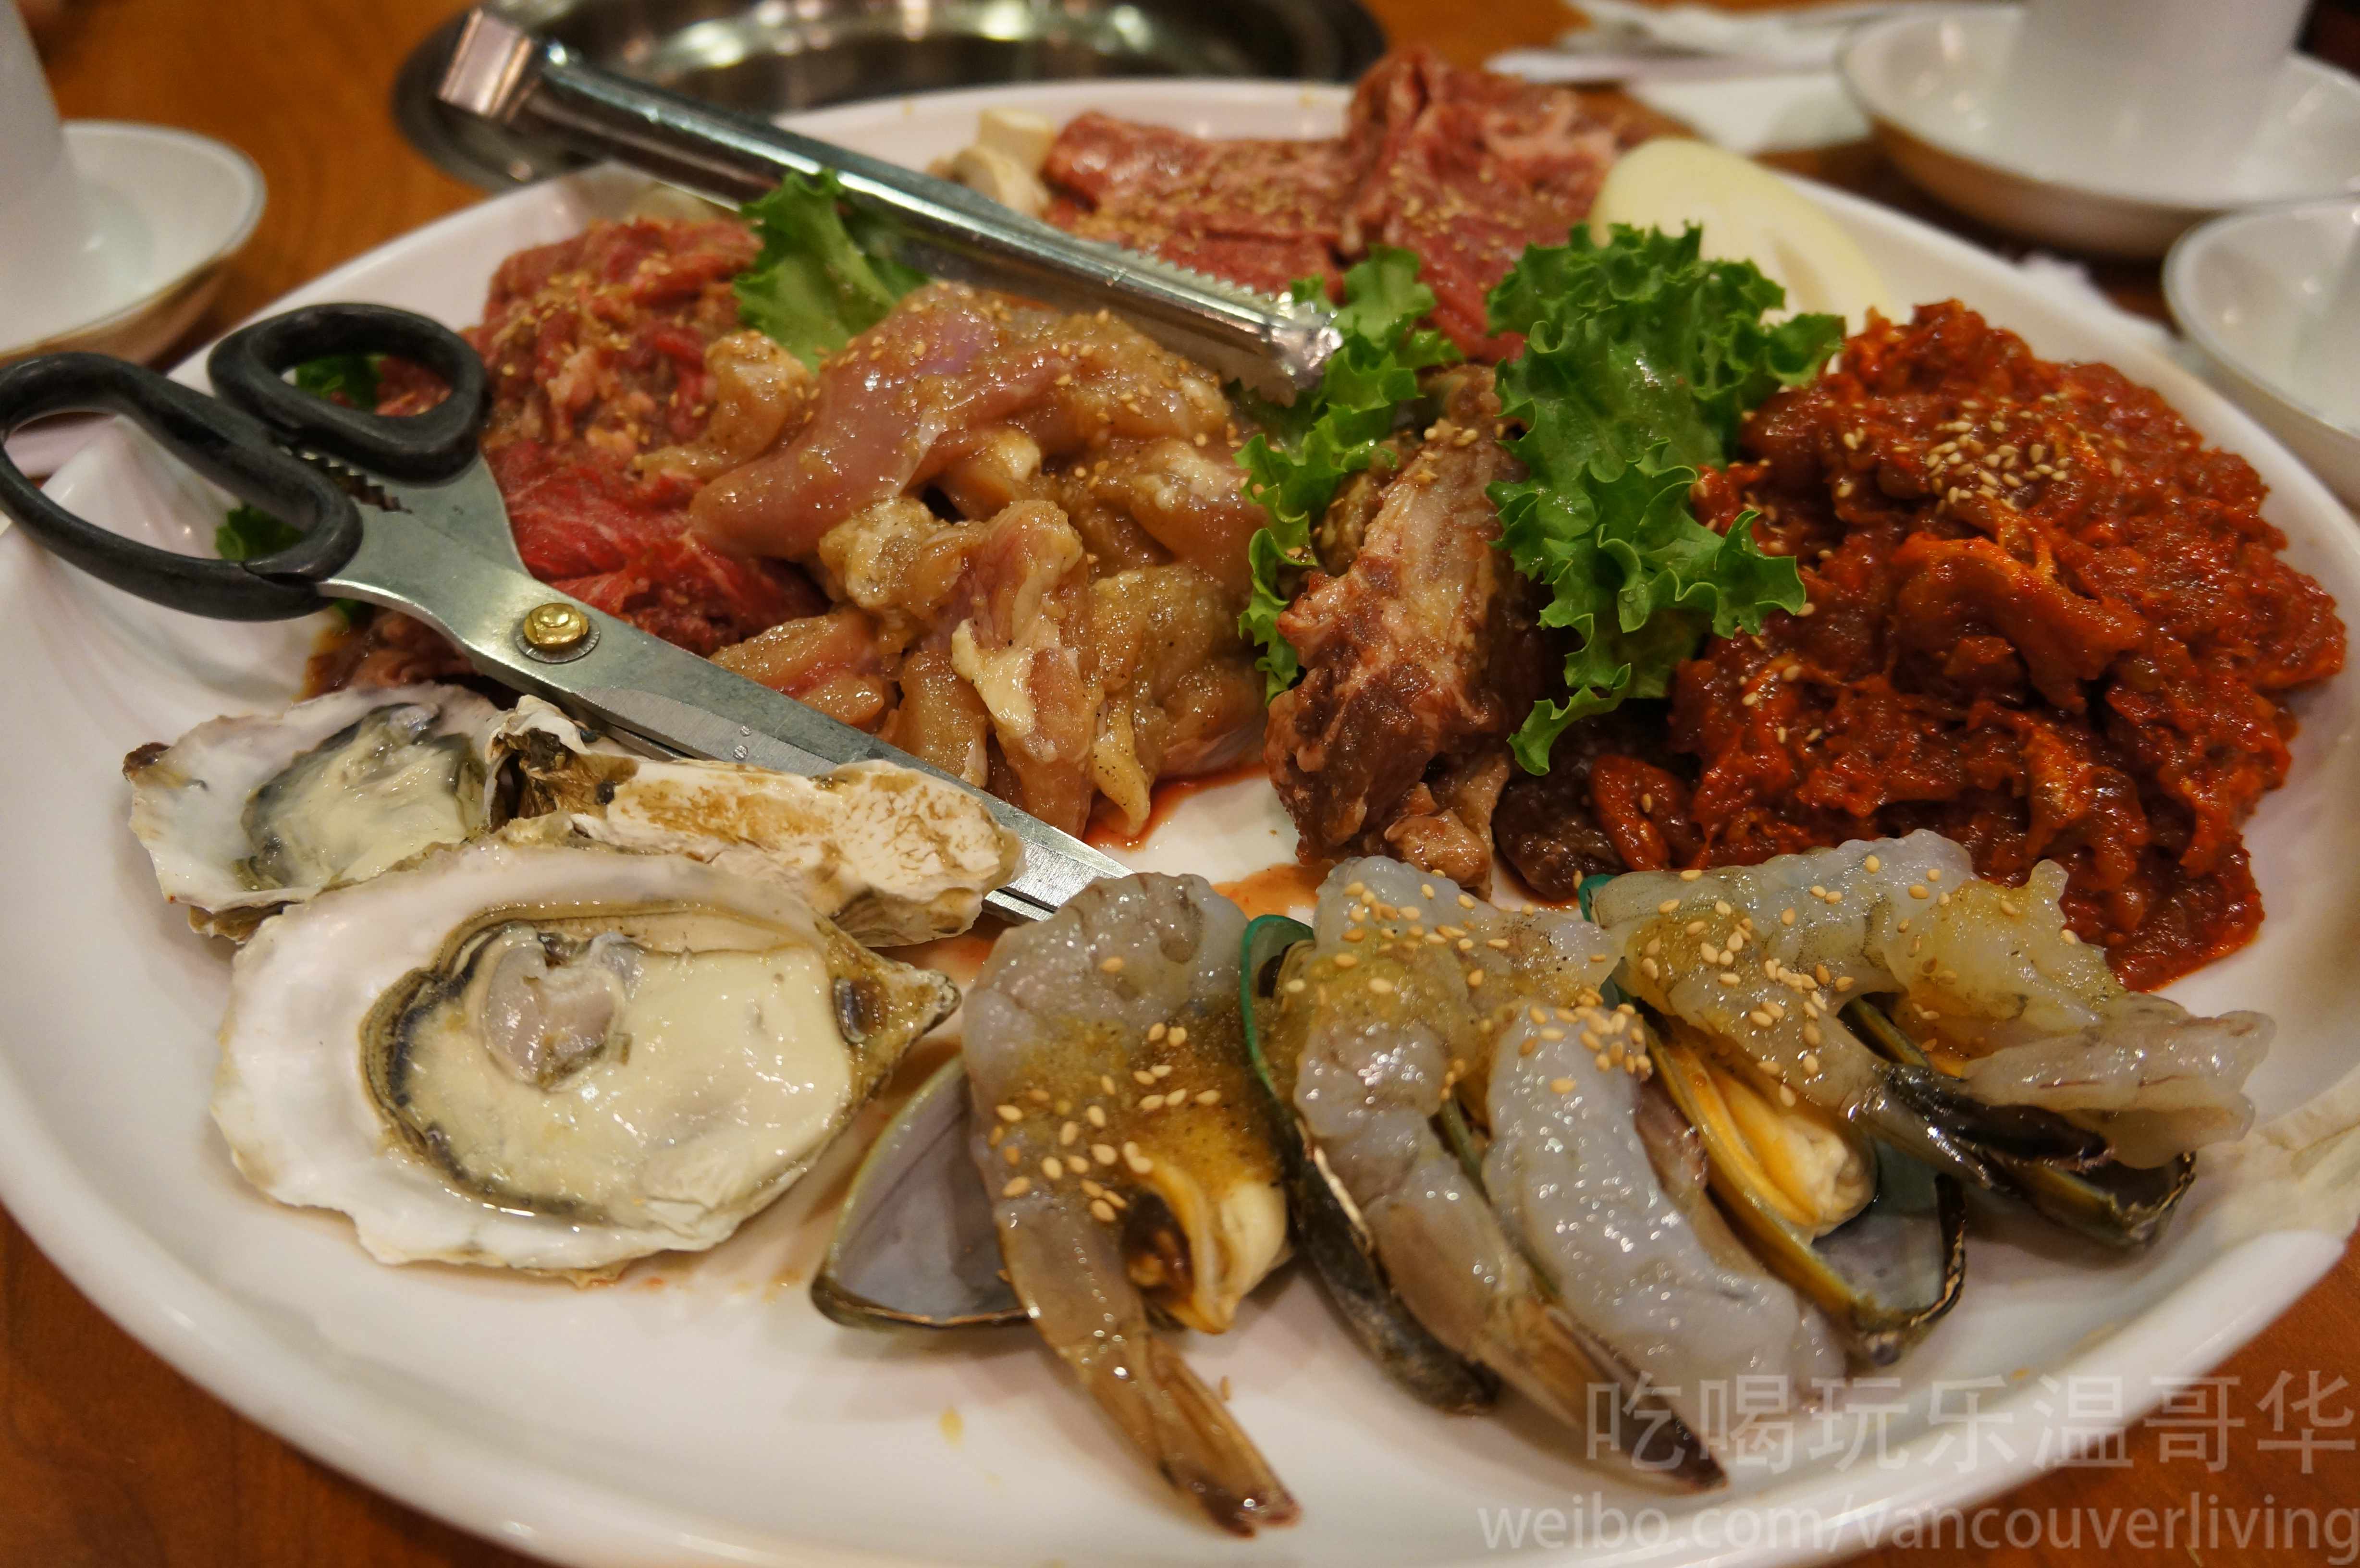 Insadong Korean BBQ and Seafood Restaurant - North Road